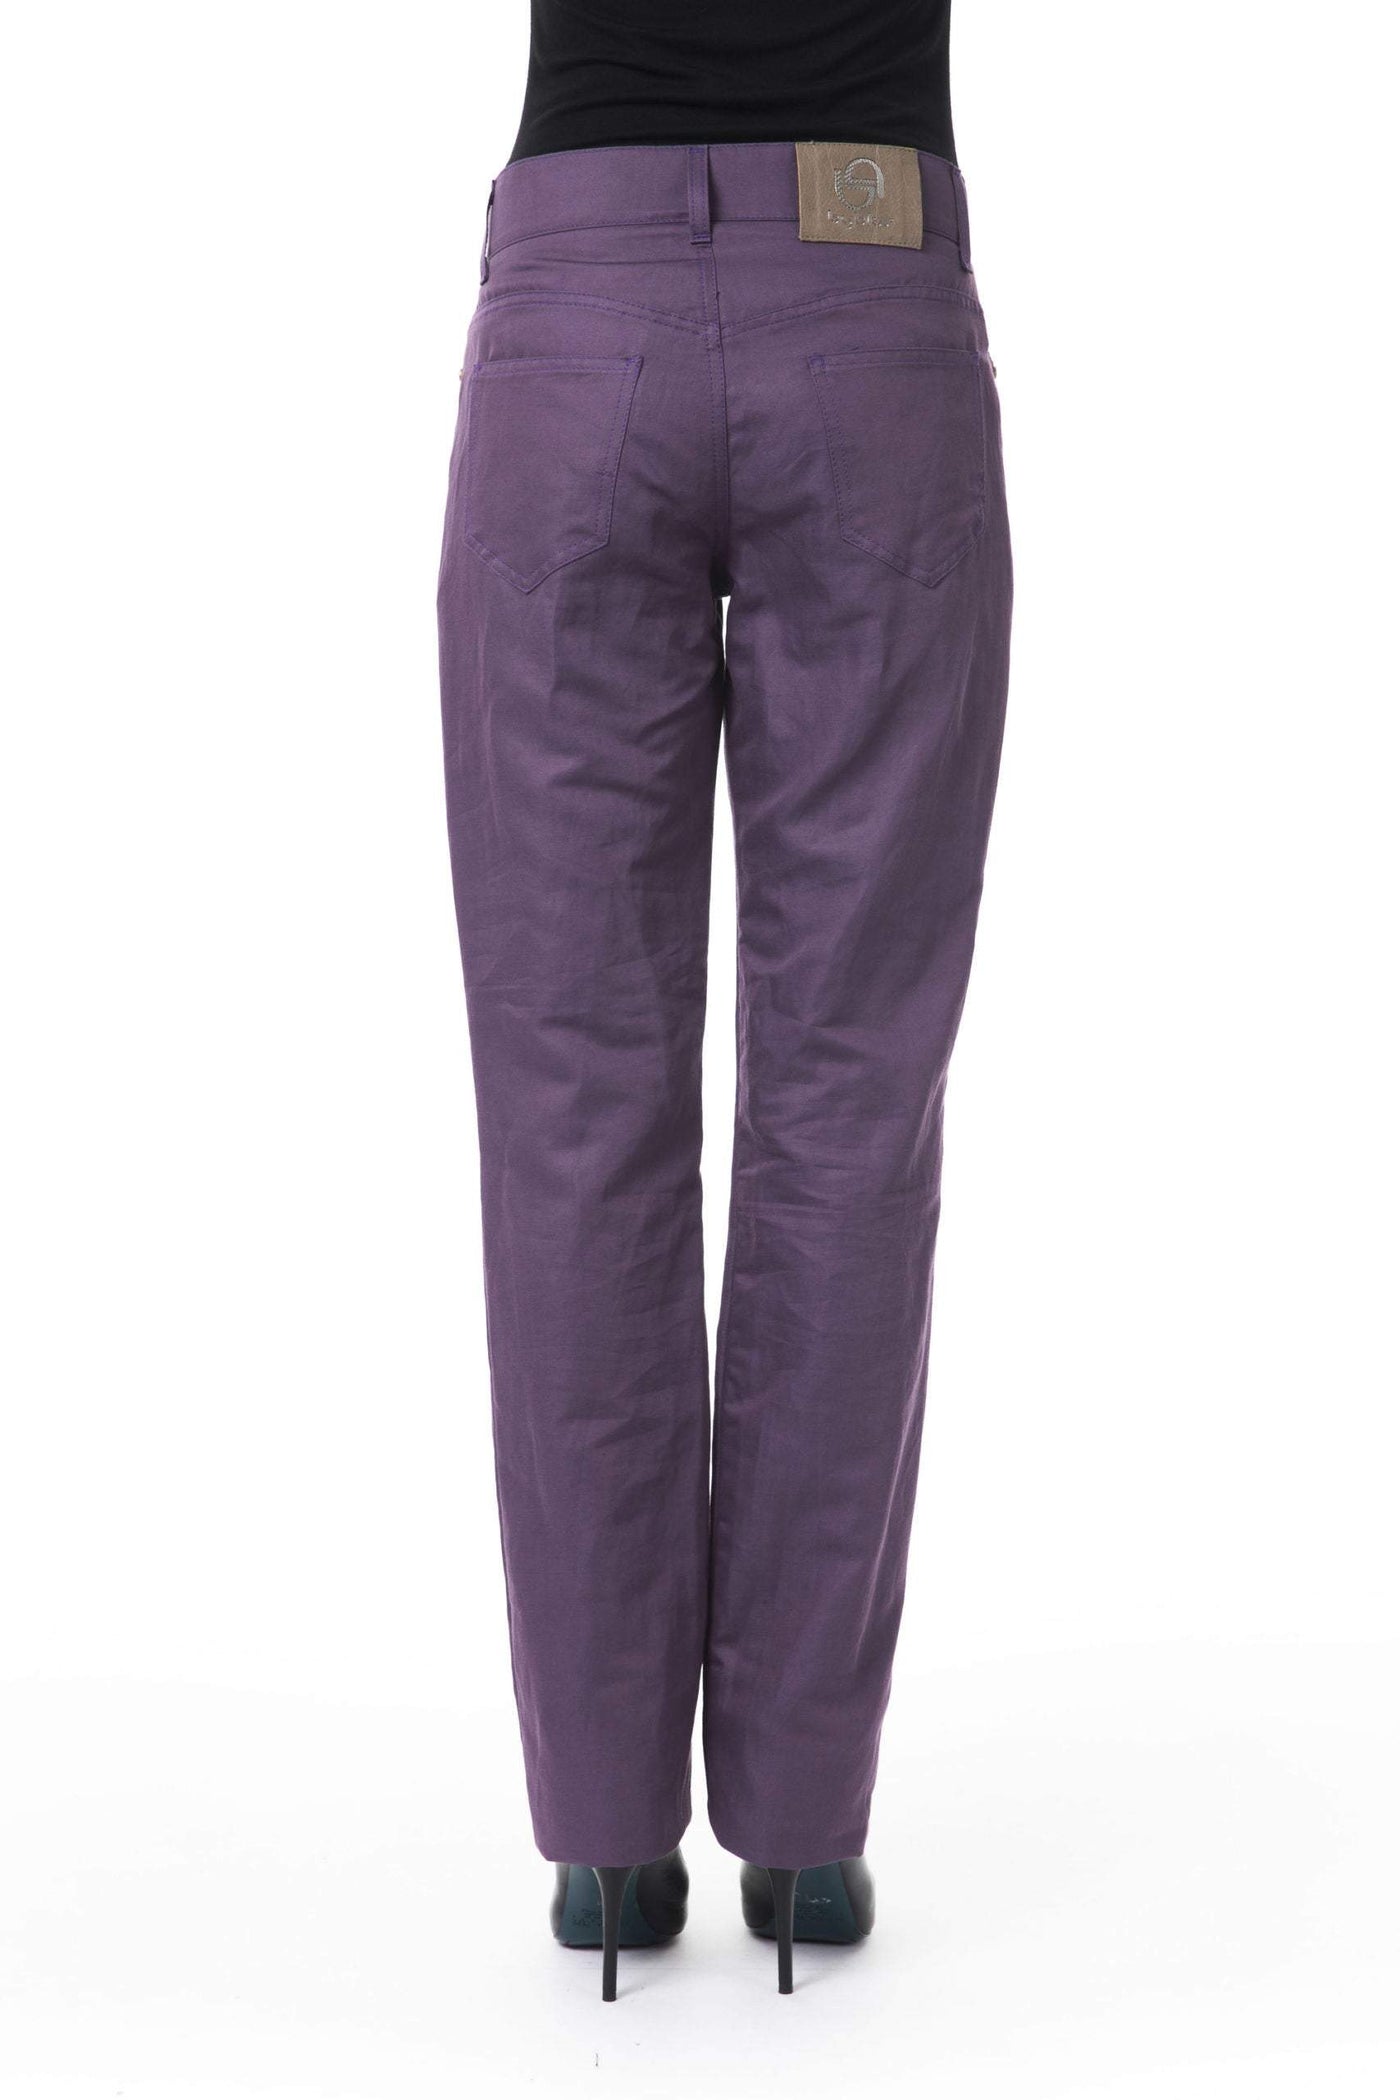 BYBLOS Violet Cotton Jeans & Pant BYBLOS, feed-1, Jeans & Pants - Women - Clothing, Violet, W28 | IT42, W29 | IT43, W30 | IT44 at SEYMAYKA